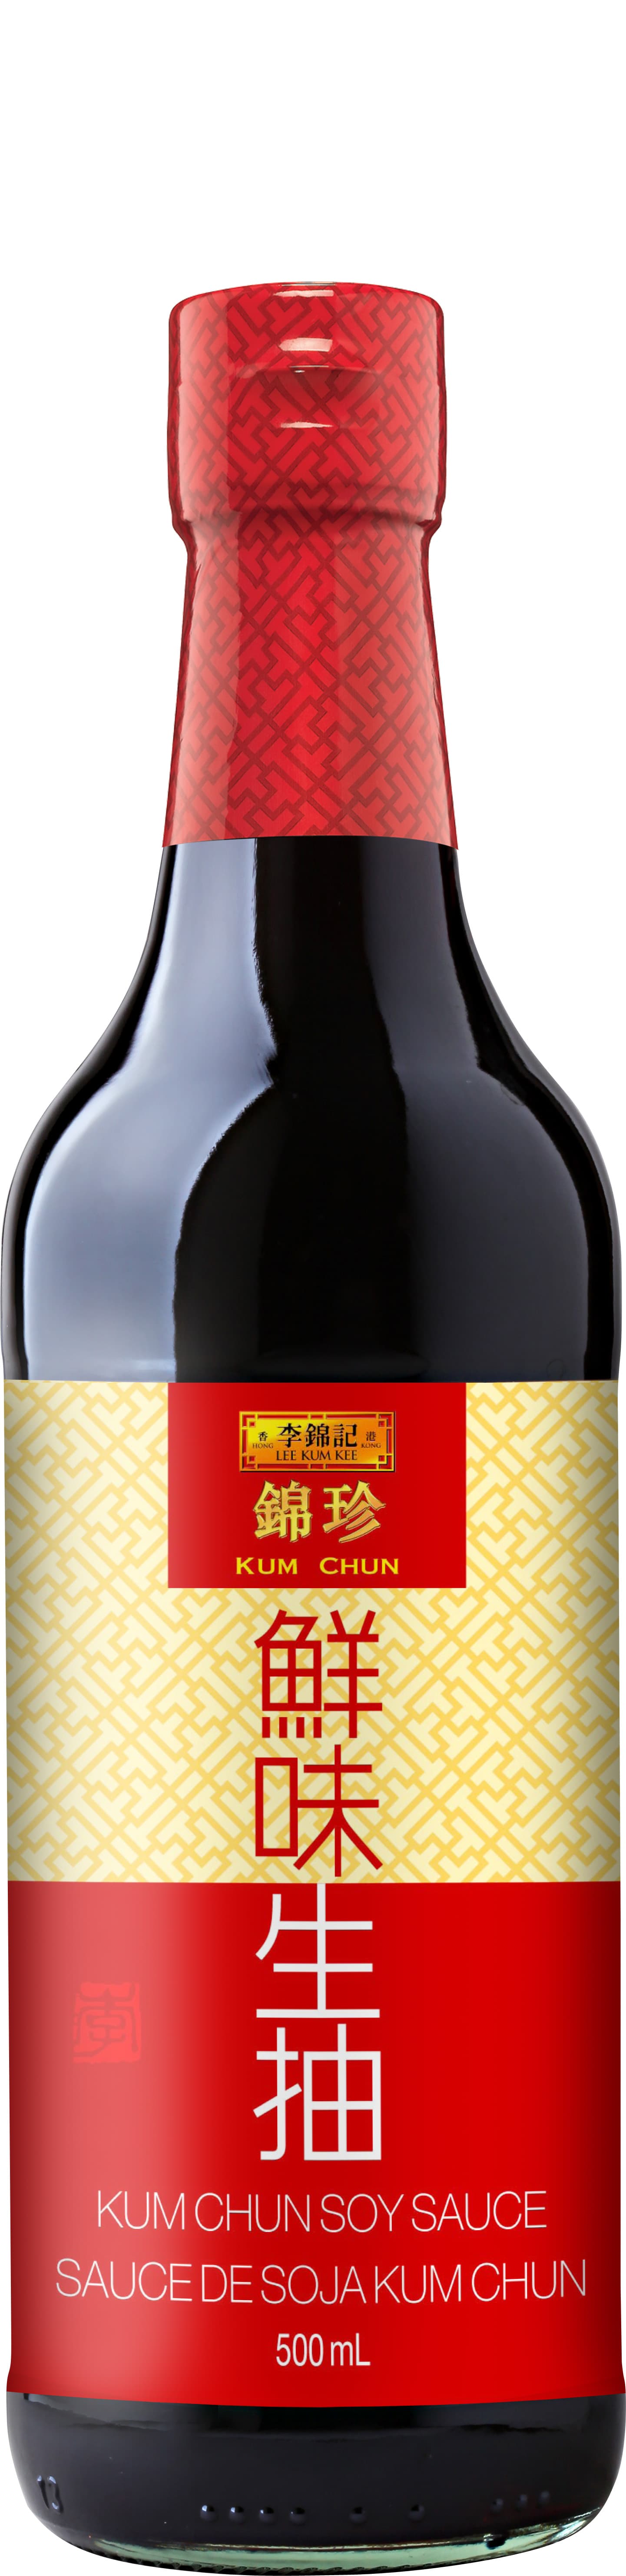 Kum Chun Soy Sauce 500ml 